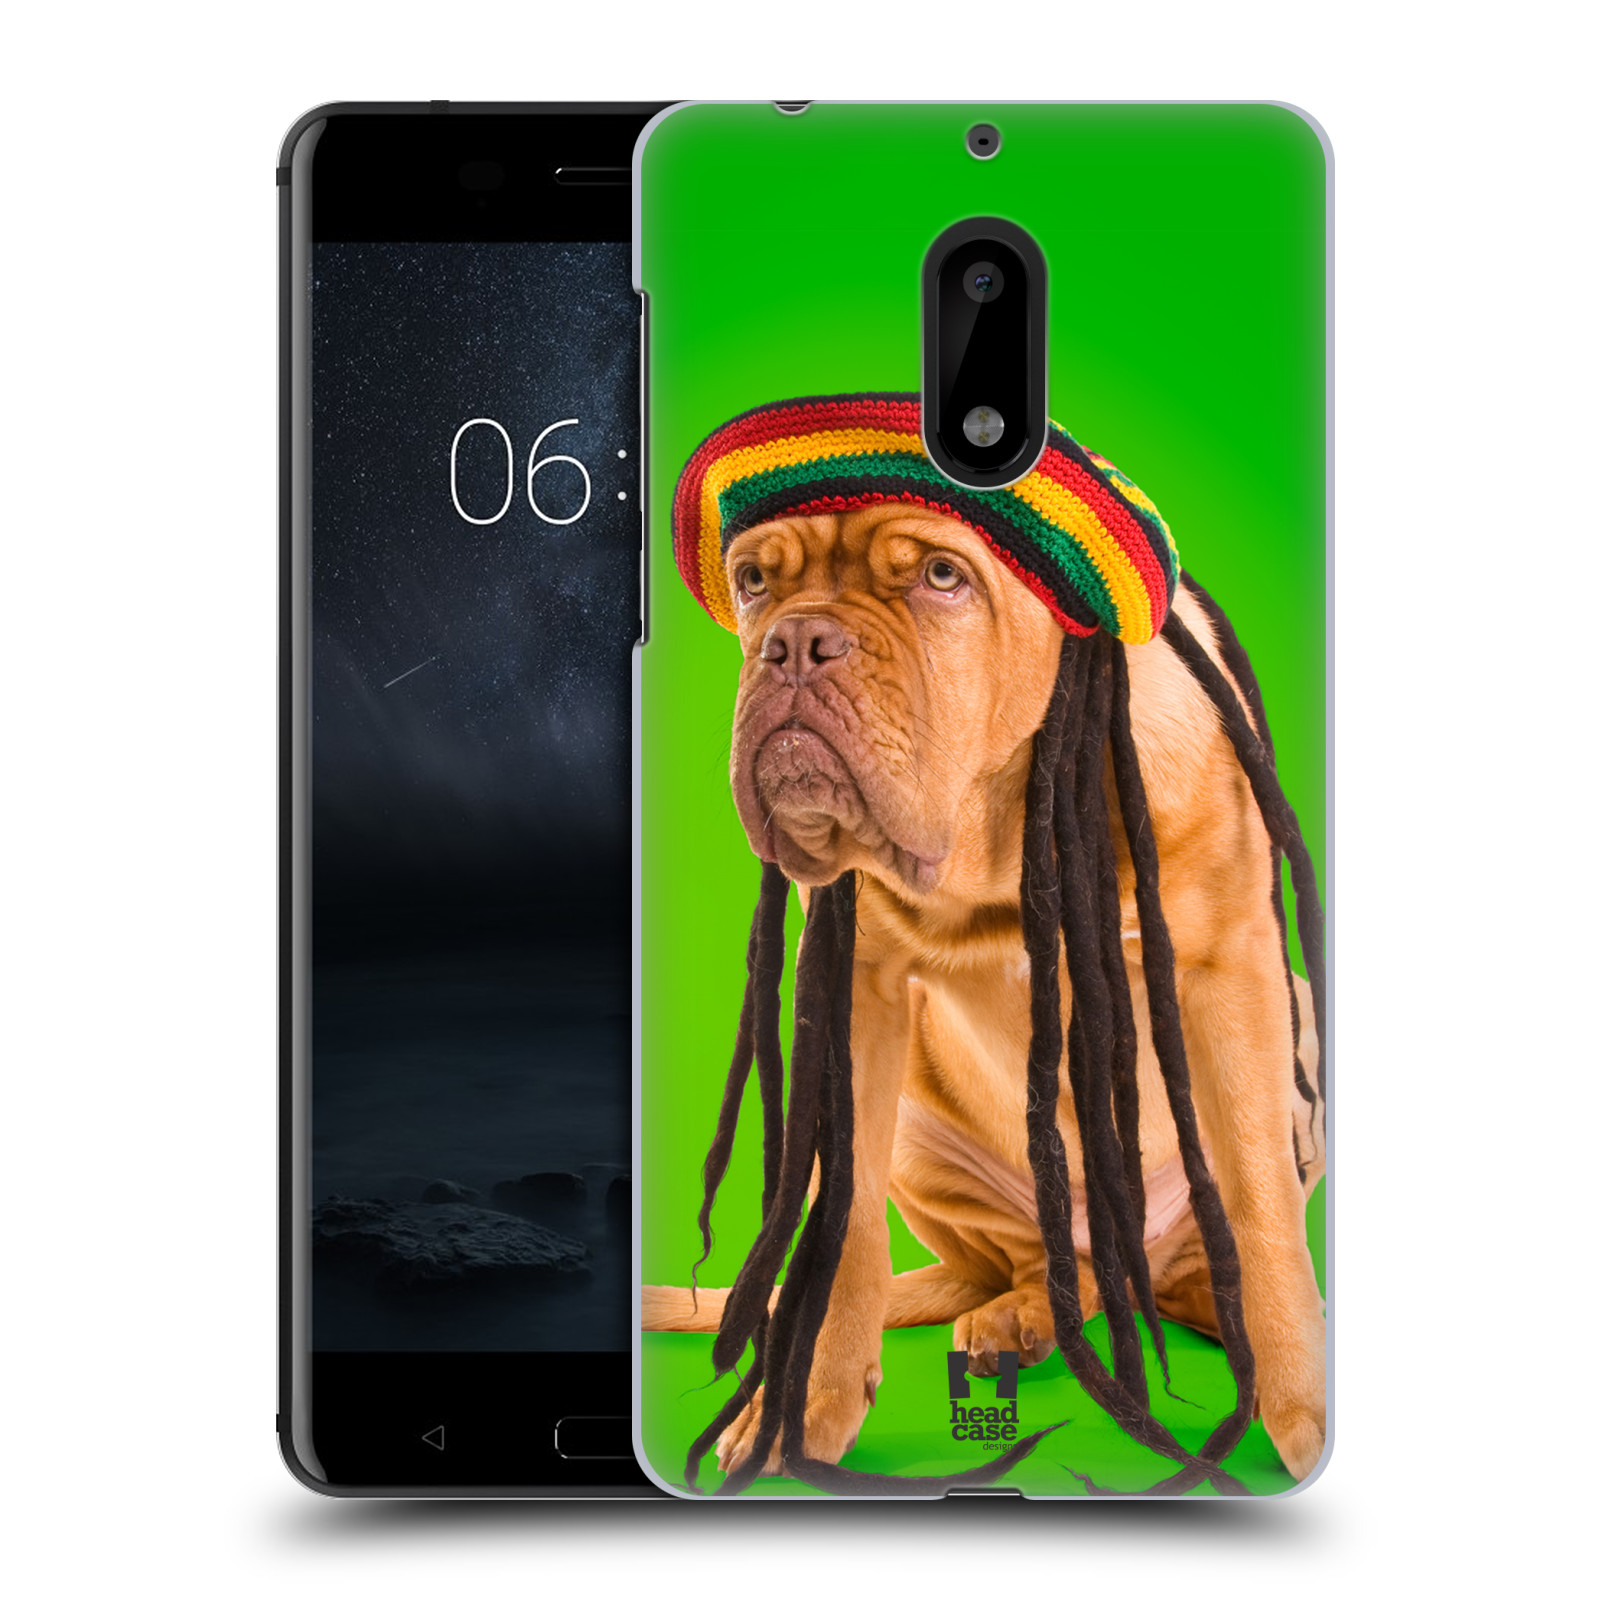 HEAD CASE plastový obal na mobil Nokia 6 vzor Legrační zvířátka pejsek dredy Rastafarián